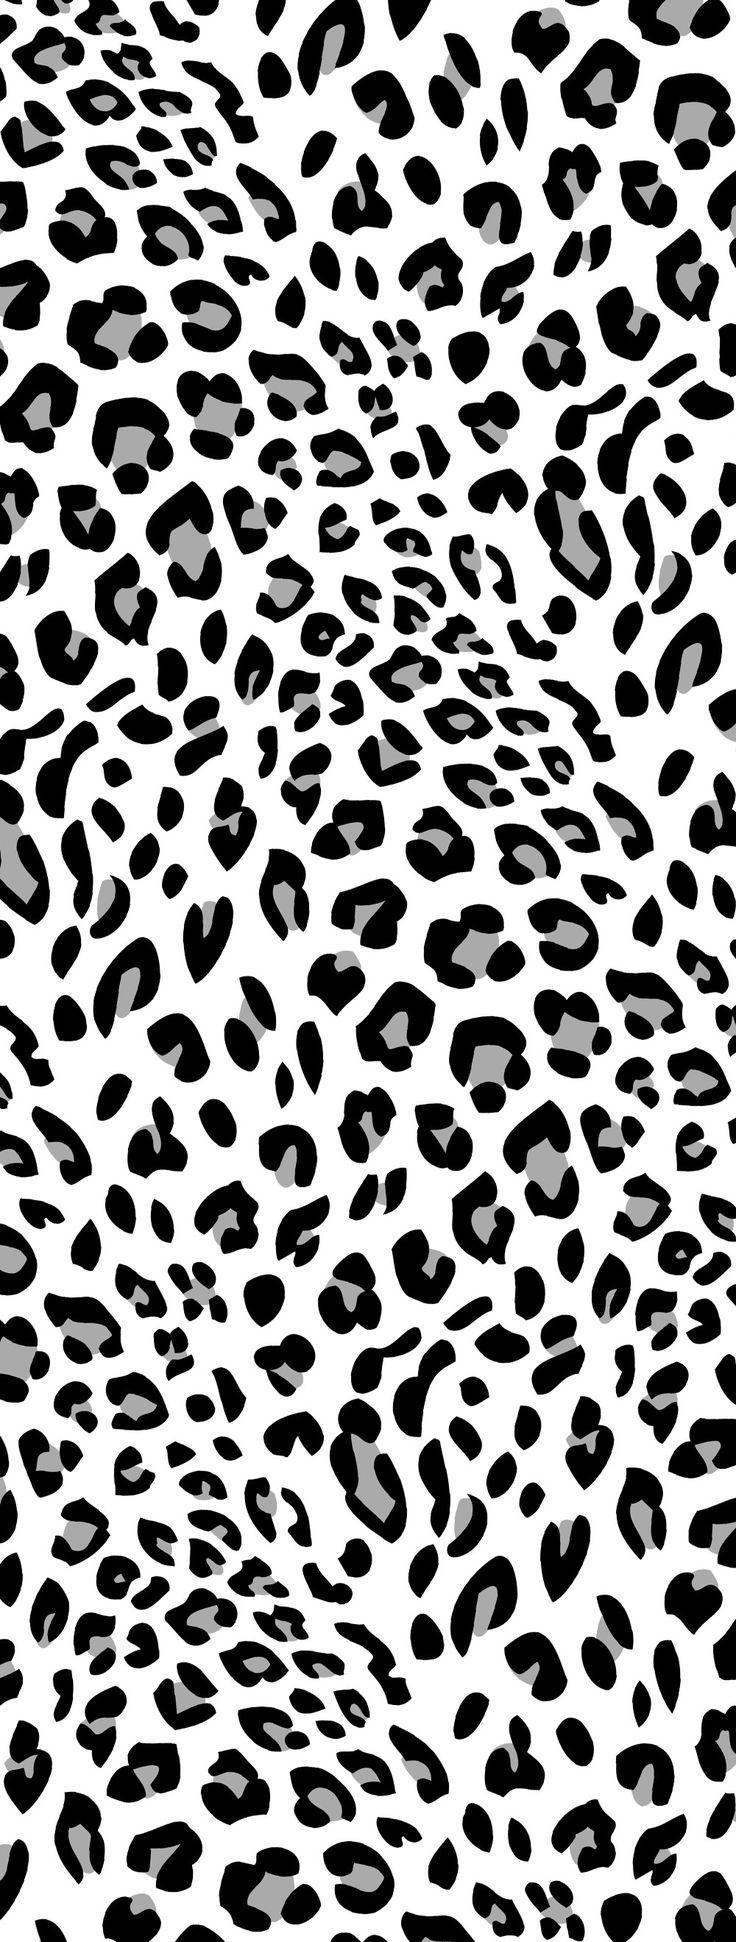 Cheetah Print Wallpaper Vsco Factory Sale  benimk12tr 1690418249